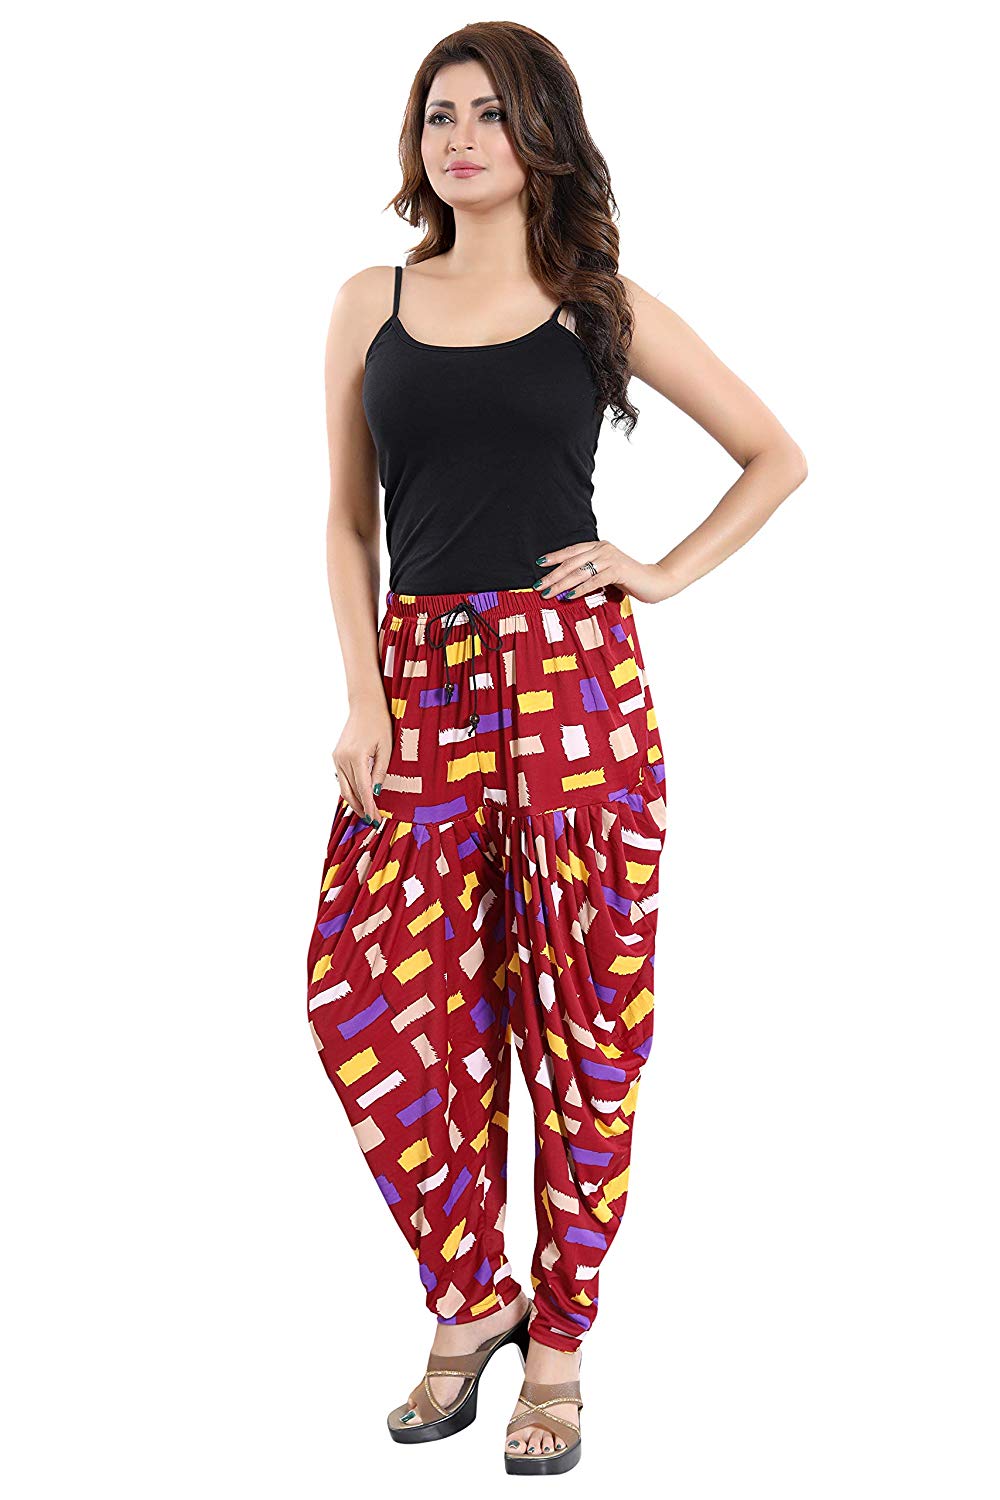 Aglare Sleeveless Embroidered Top With Motif Print Dhoti Pants & Sling Bag  – Patoda dhoti Red – Online Shoping | Lehenga choli Online | Lehenga choli  for girls | Lehenga choli for KIds